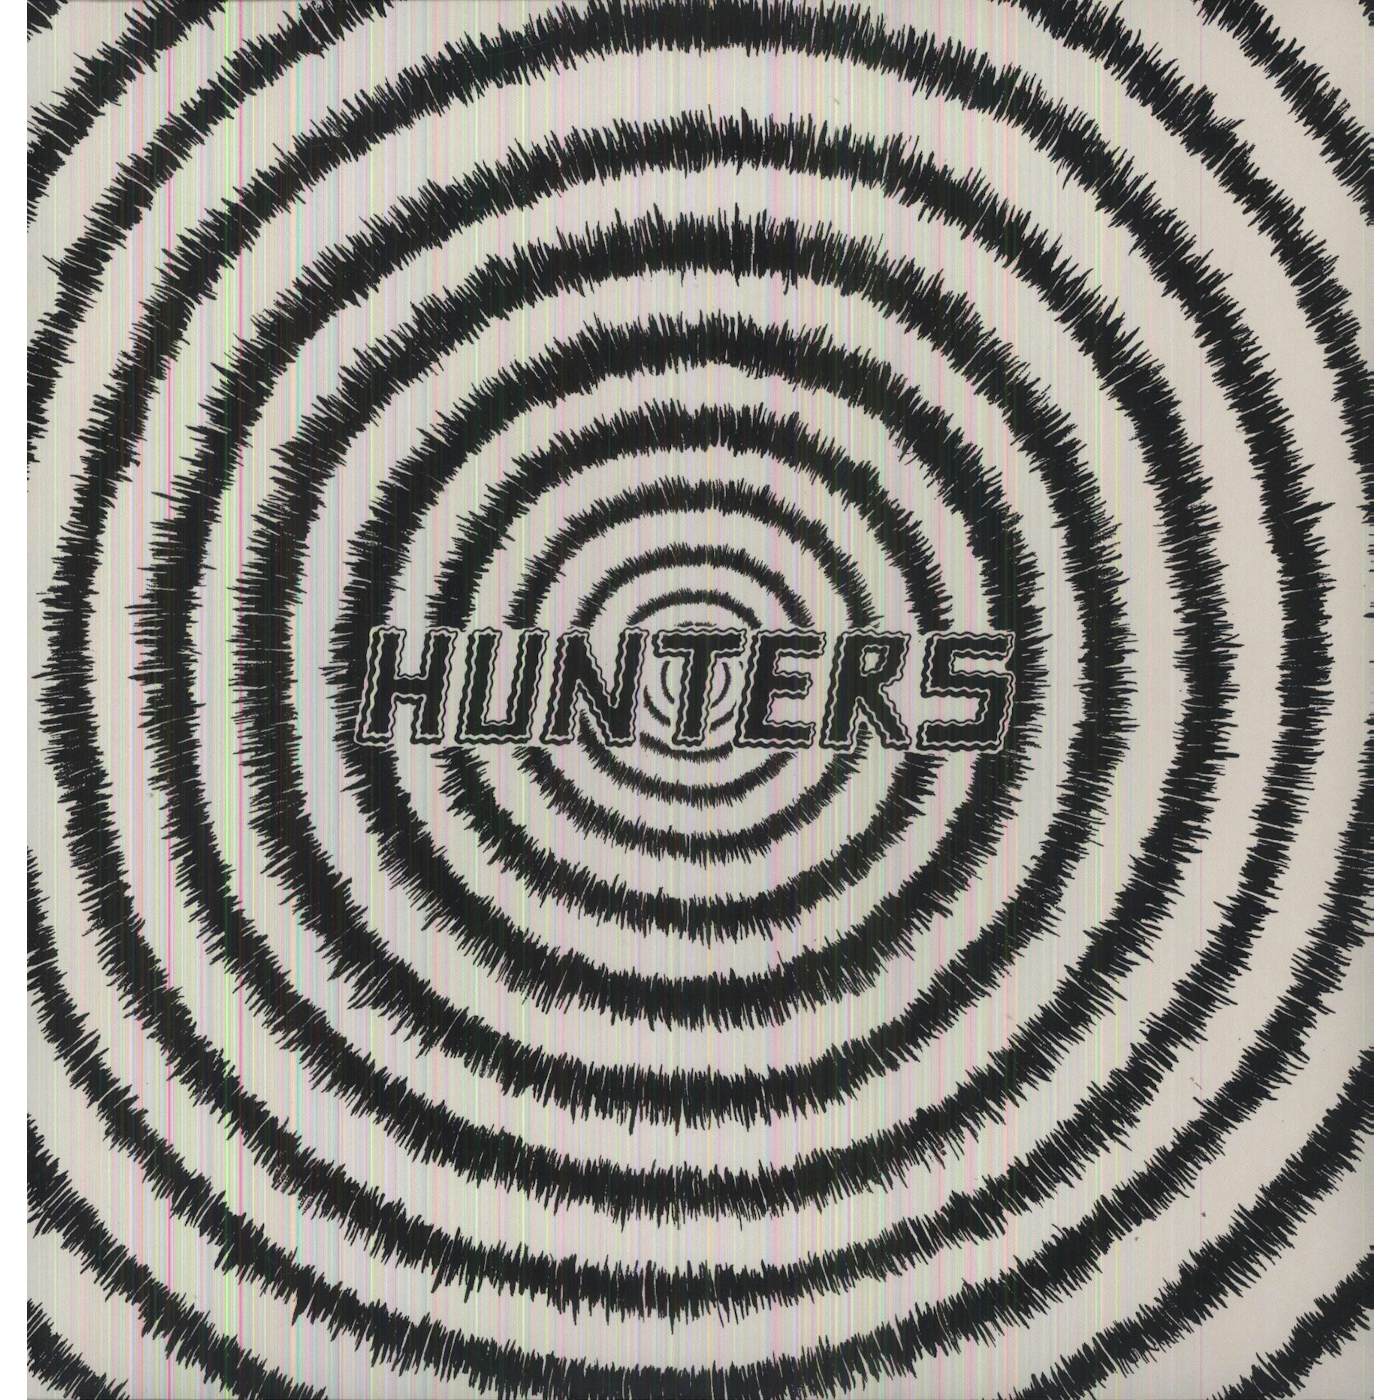 Hunters Vinyl Record